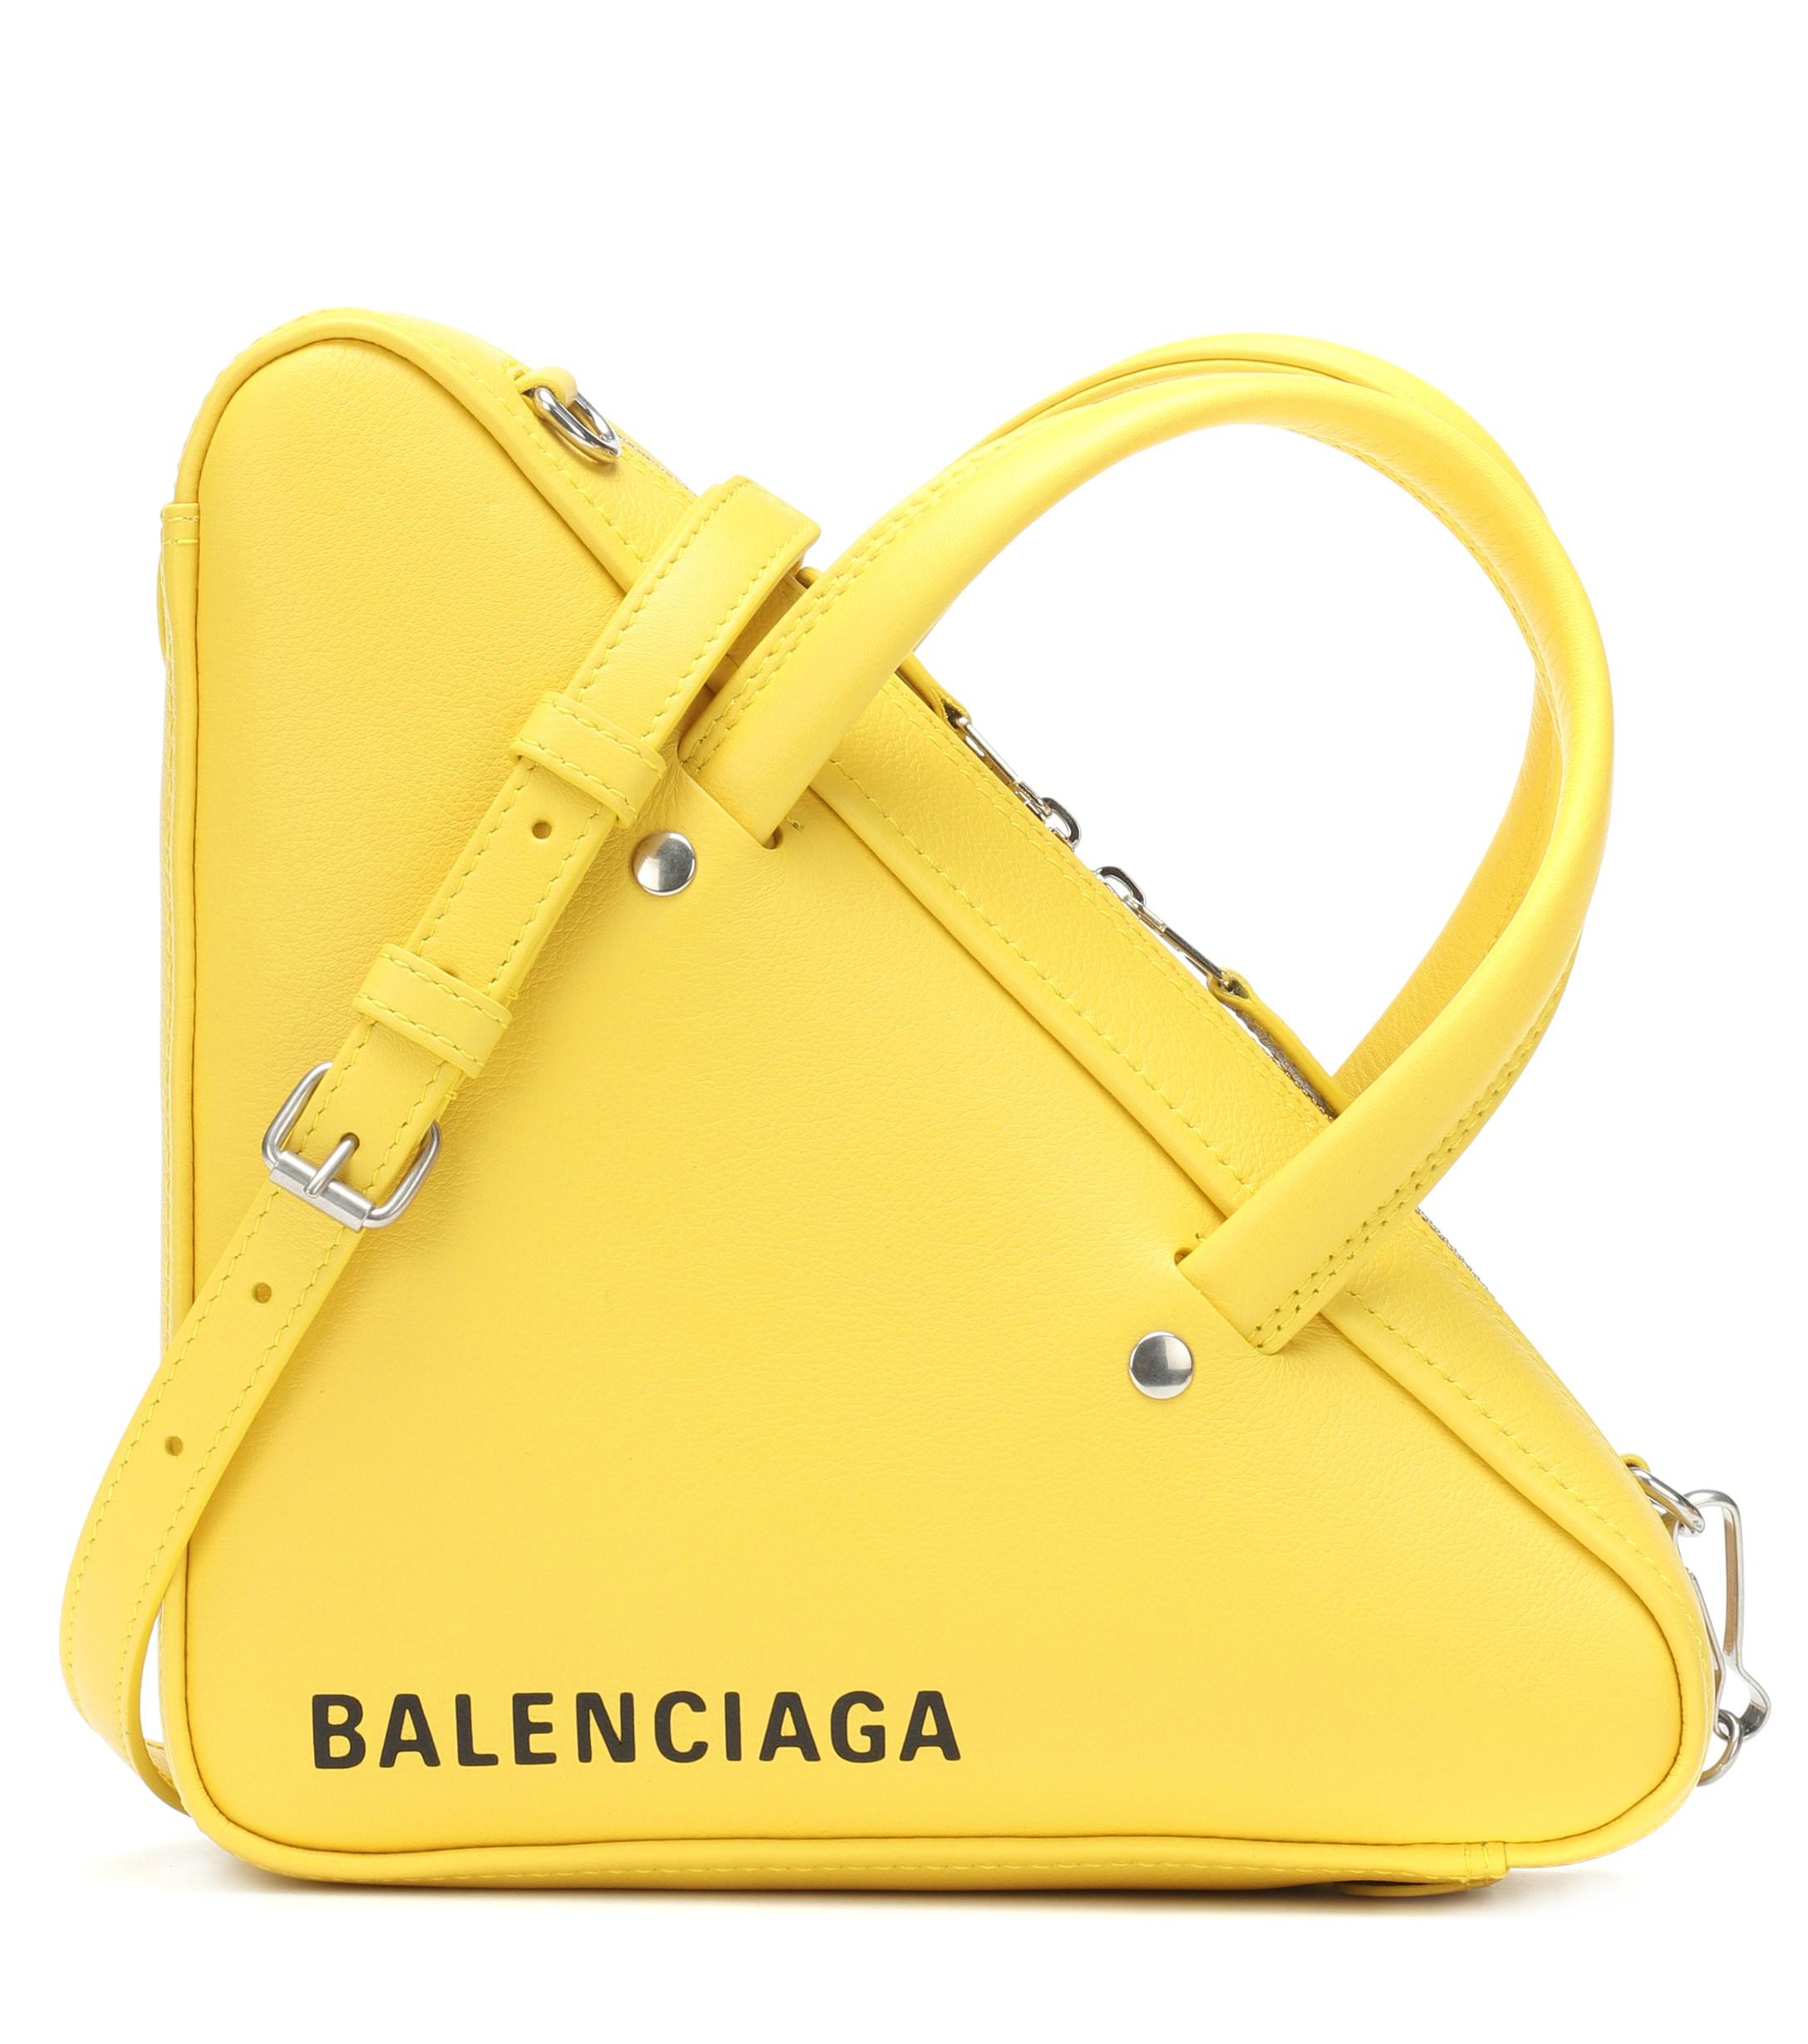 Balenciaga Sac Triangle Hot Sale, 53% OFF | www.geb.cat